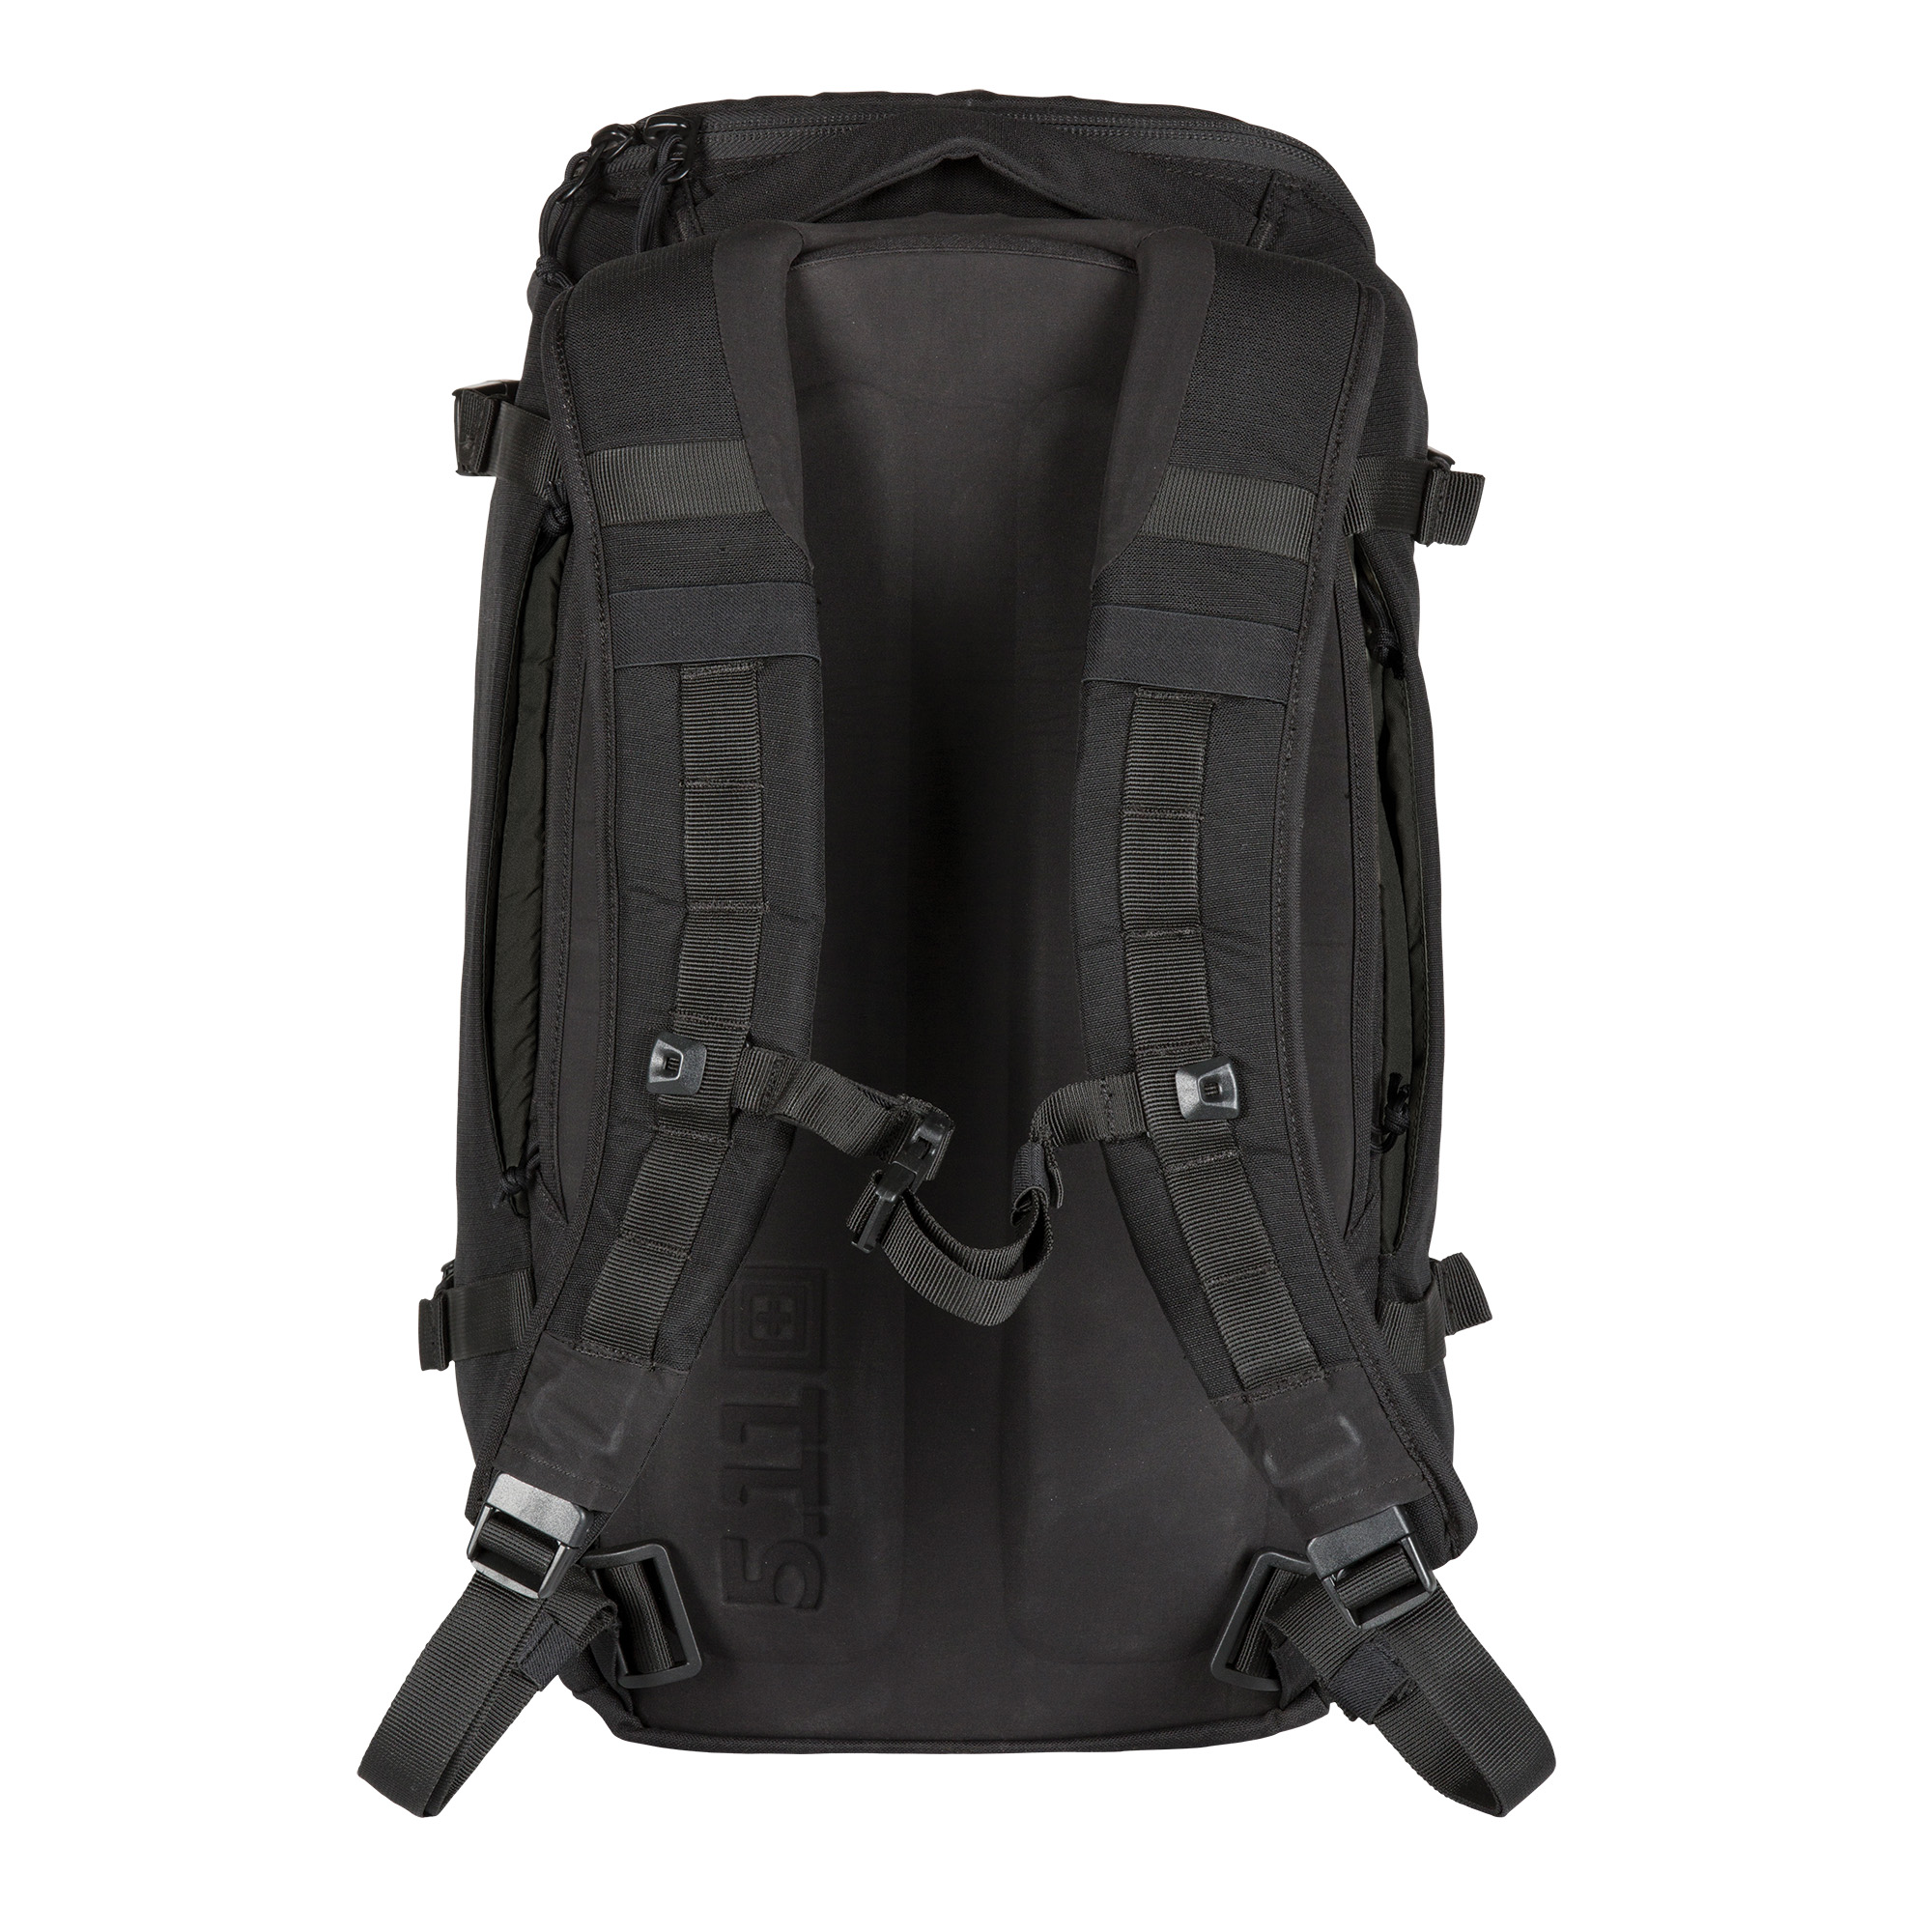 5.11 AMP24 Backpack